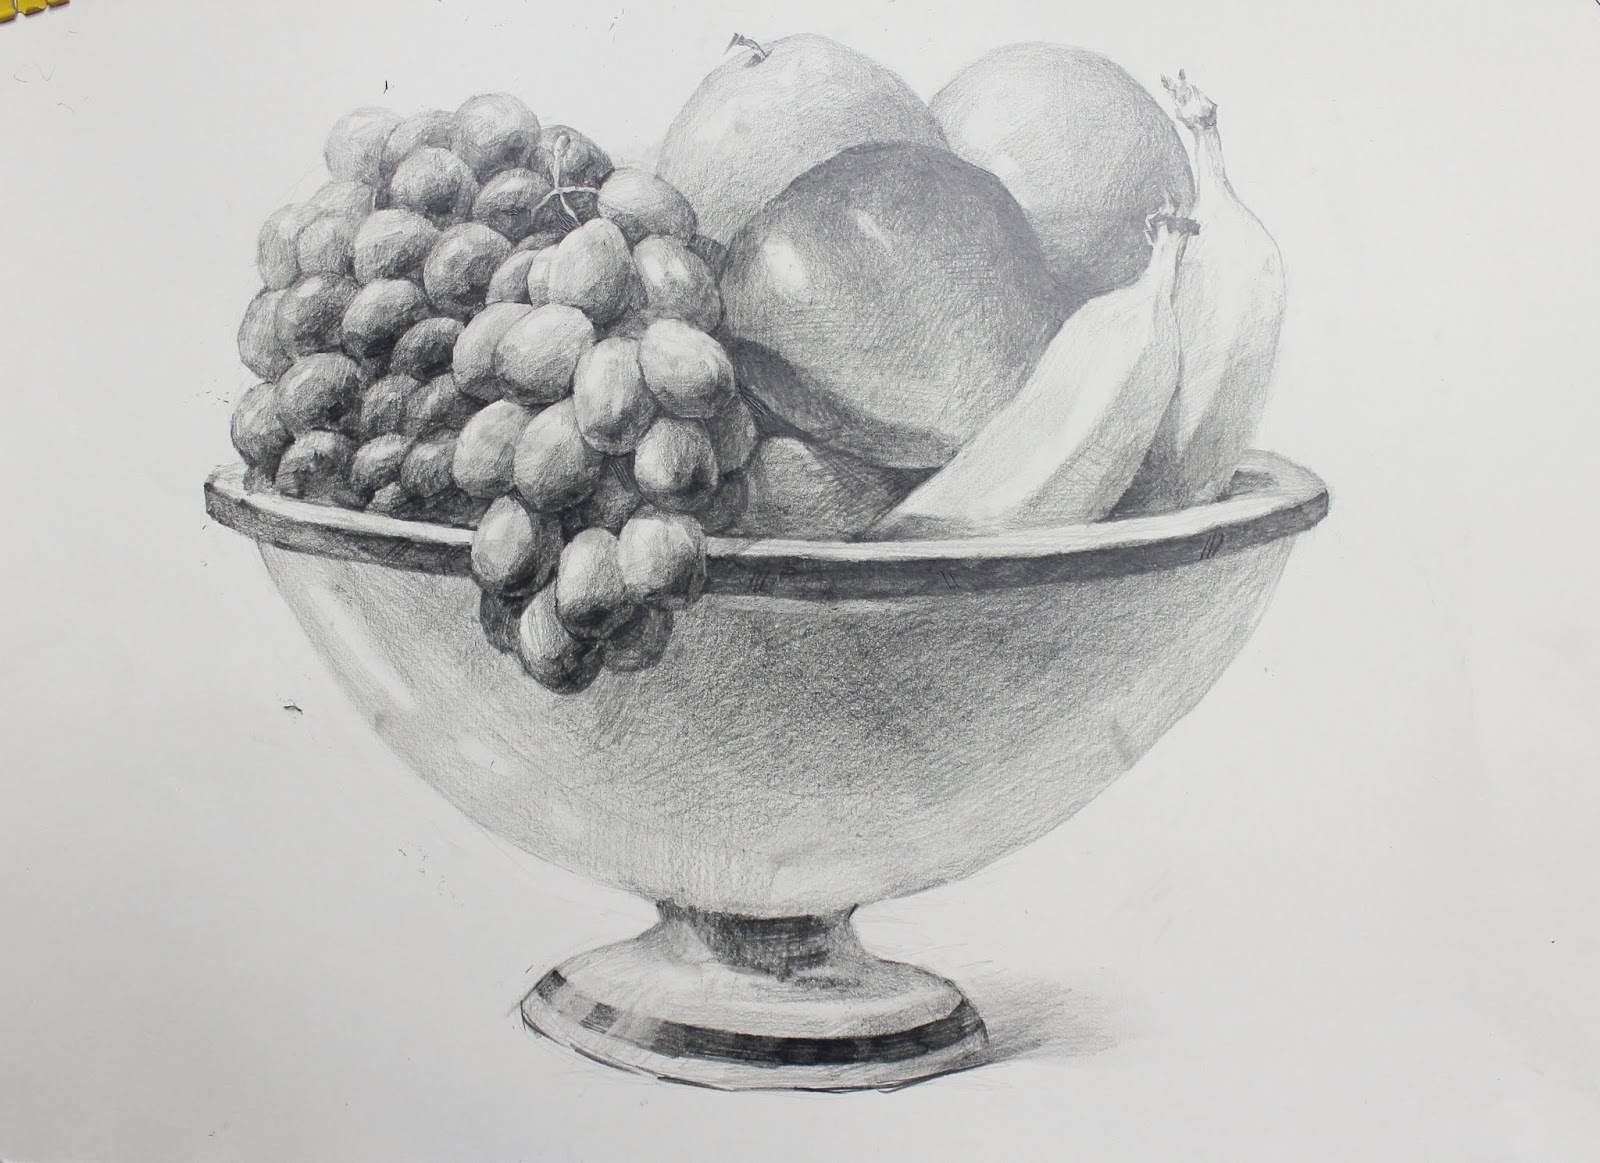 NAMIL ART [drawing step by step] Fruit bowl Basic Still